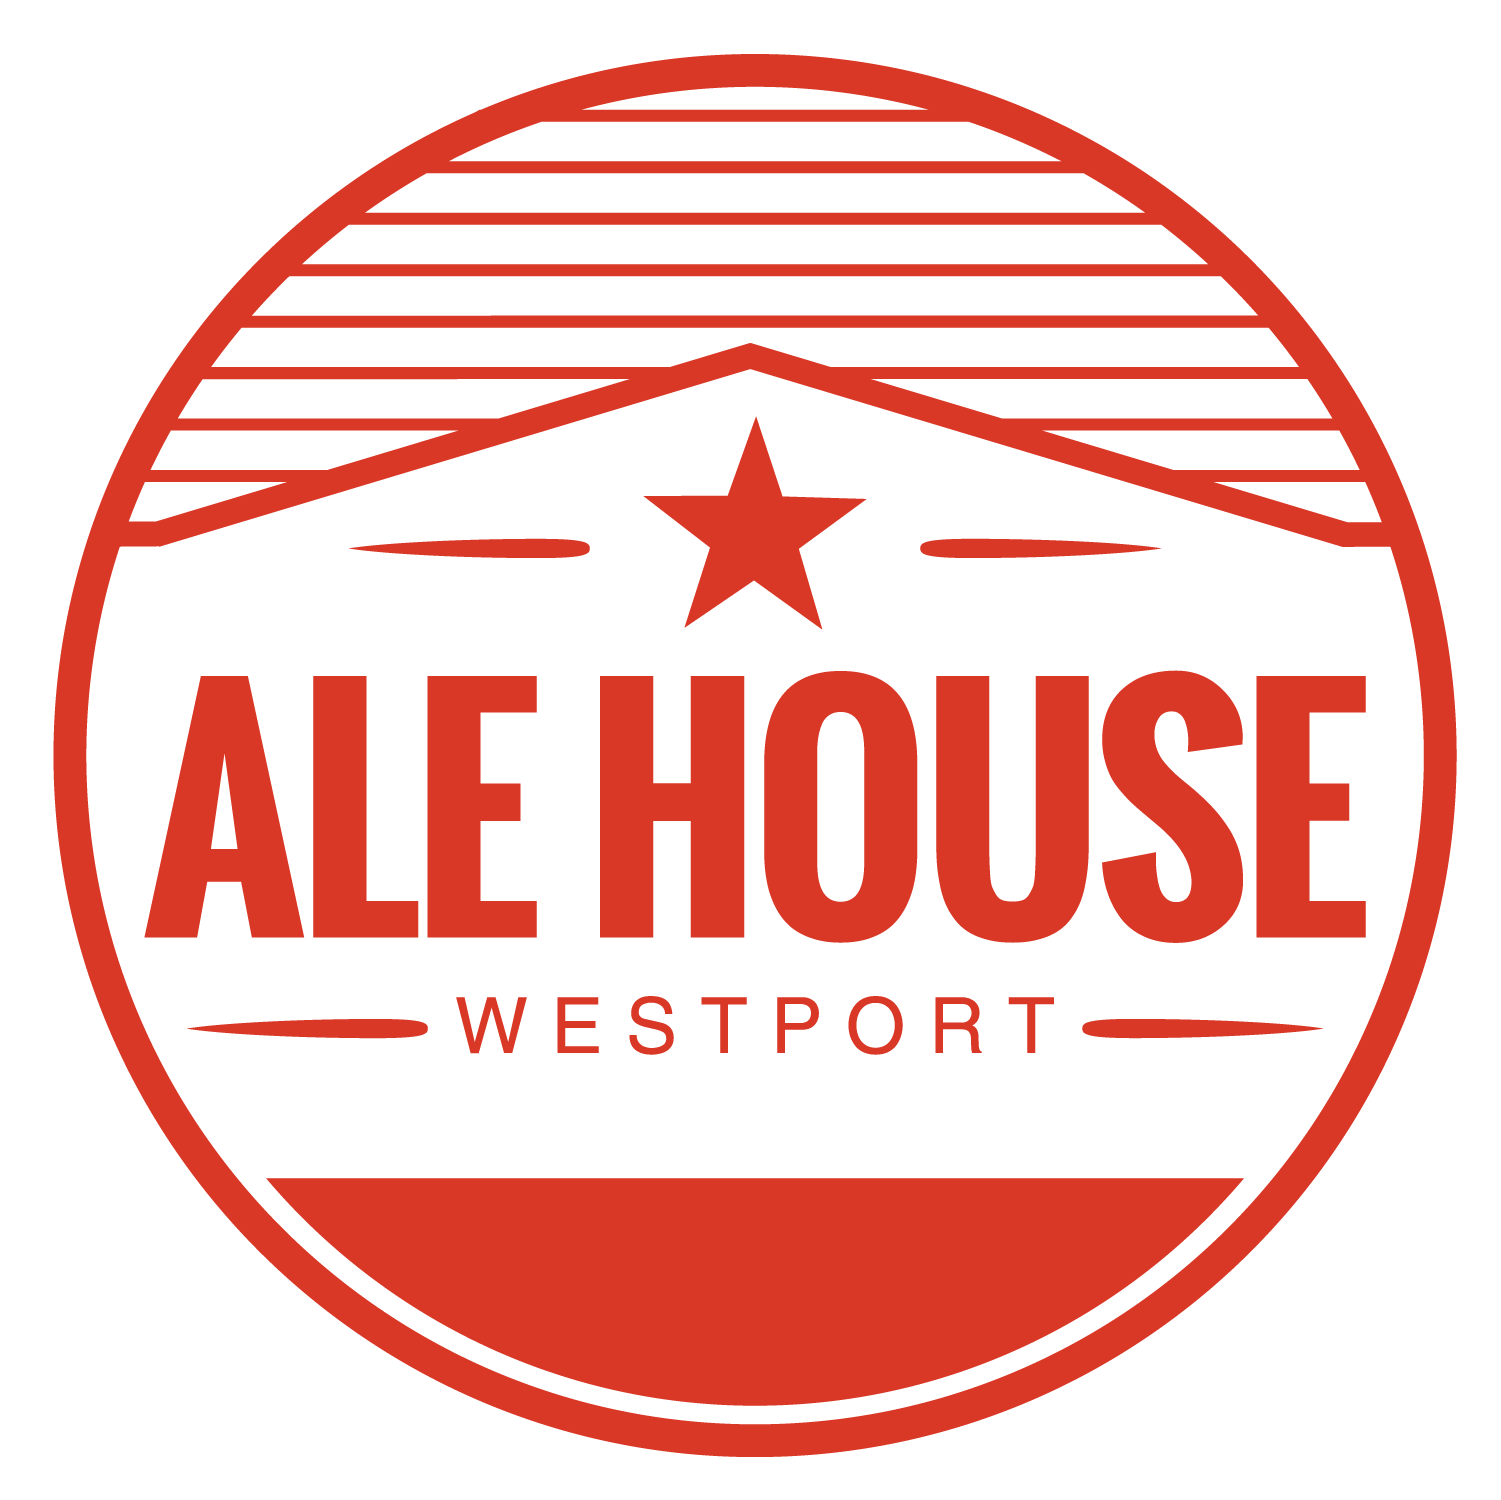 Westport Ale House logo